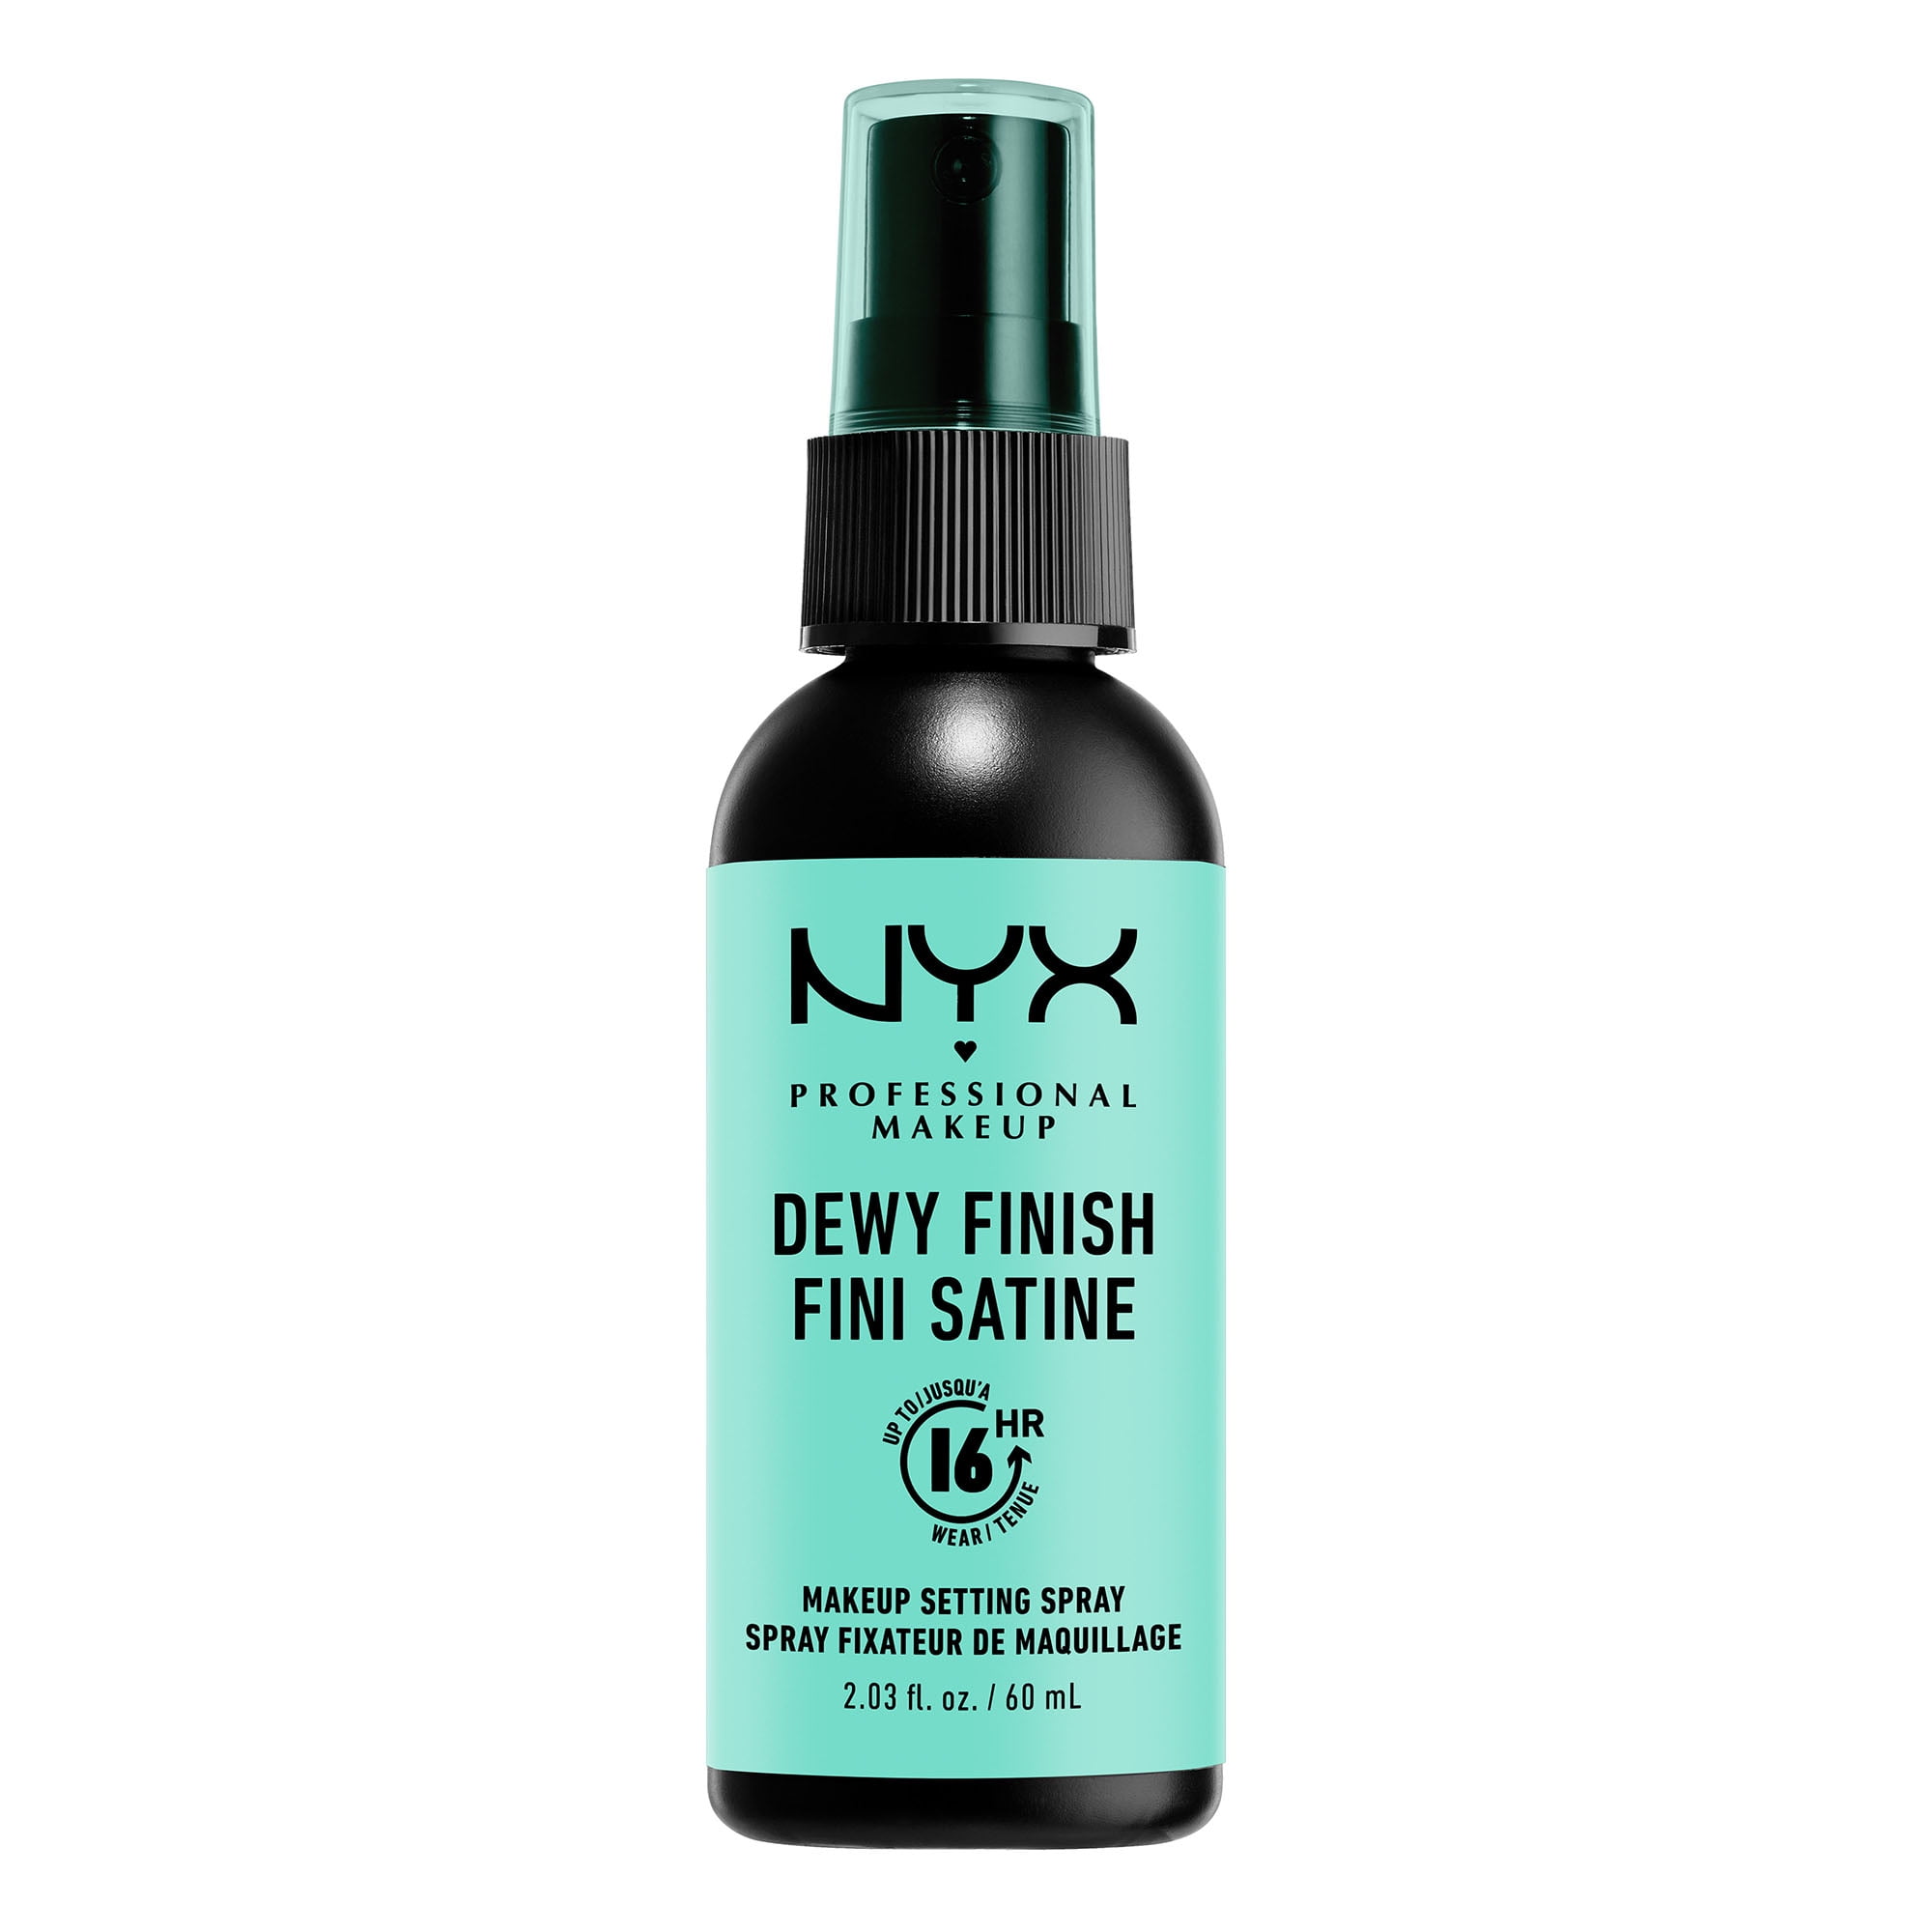 NYX Professional Makeup Setting Spray, Long-Lasting Dewy Finish, Vegan Formula, 2.03 fl oz - Walmart.com